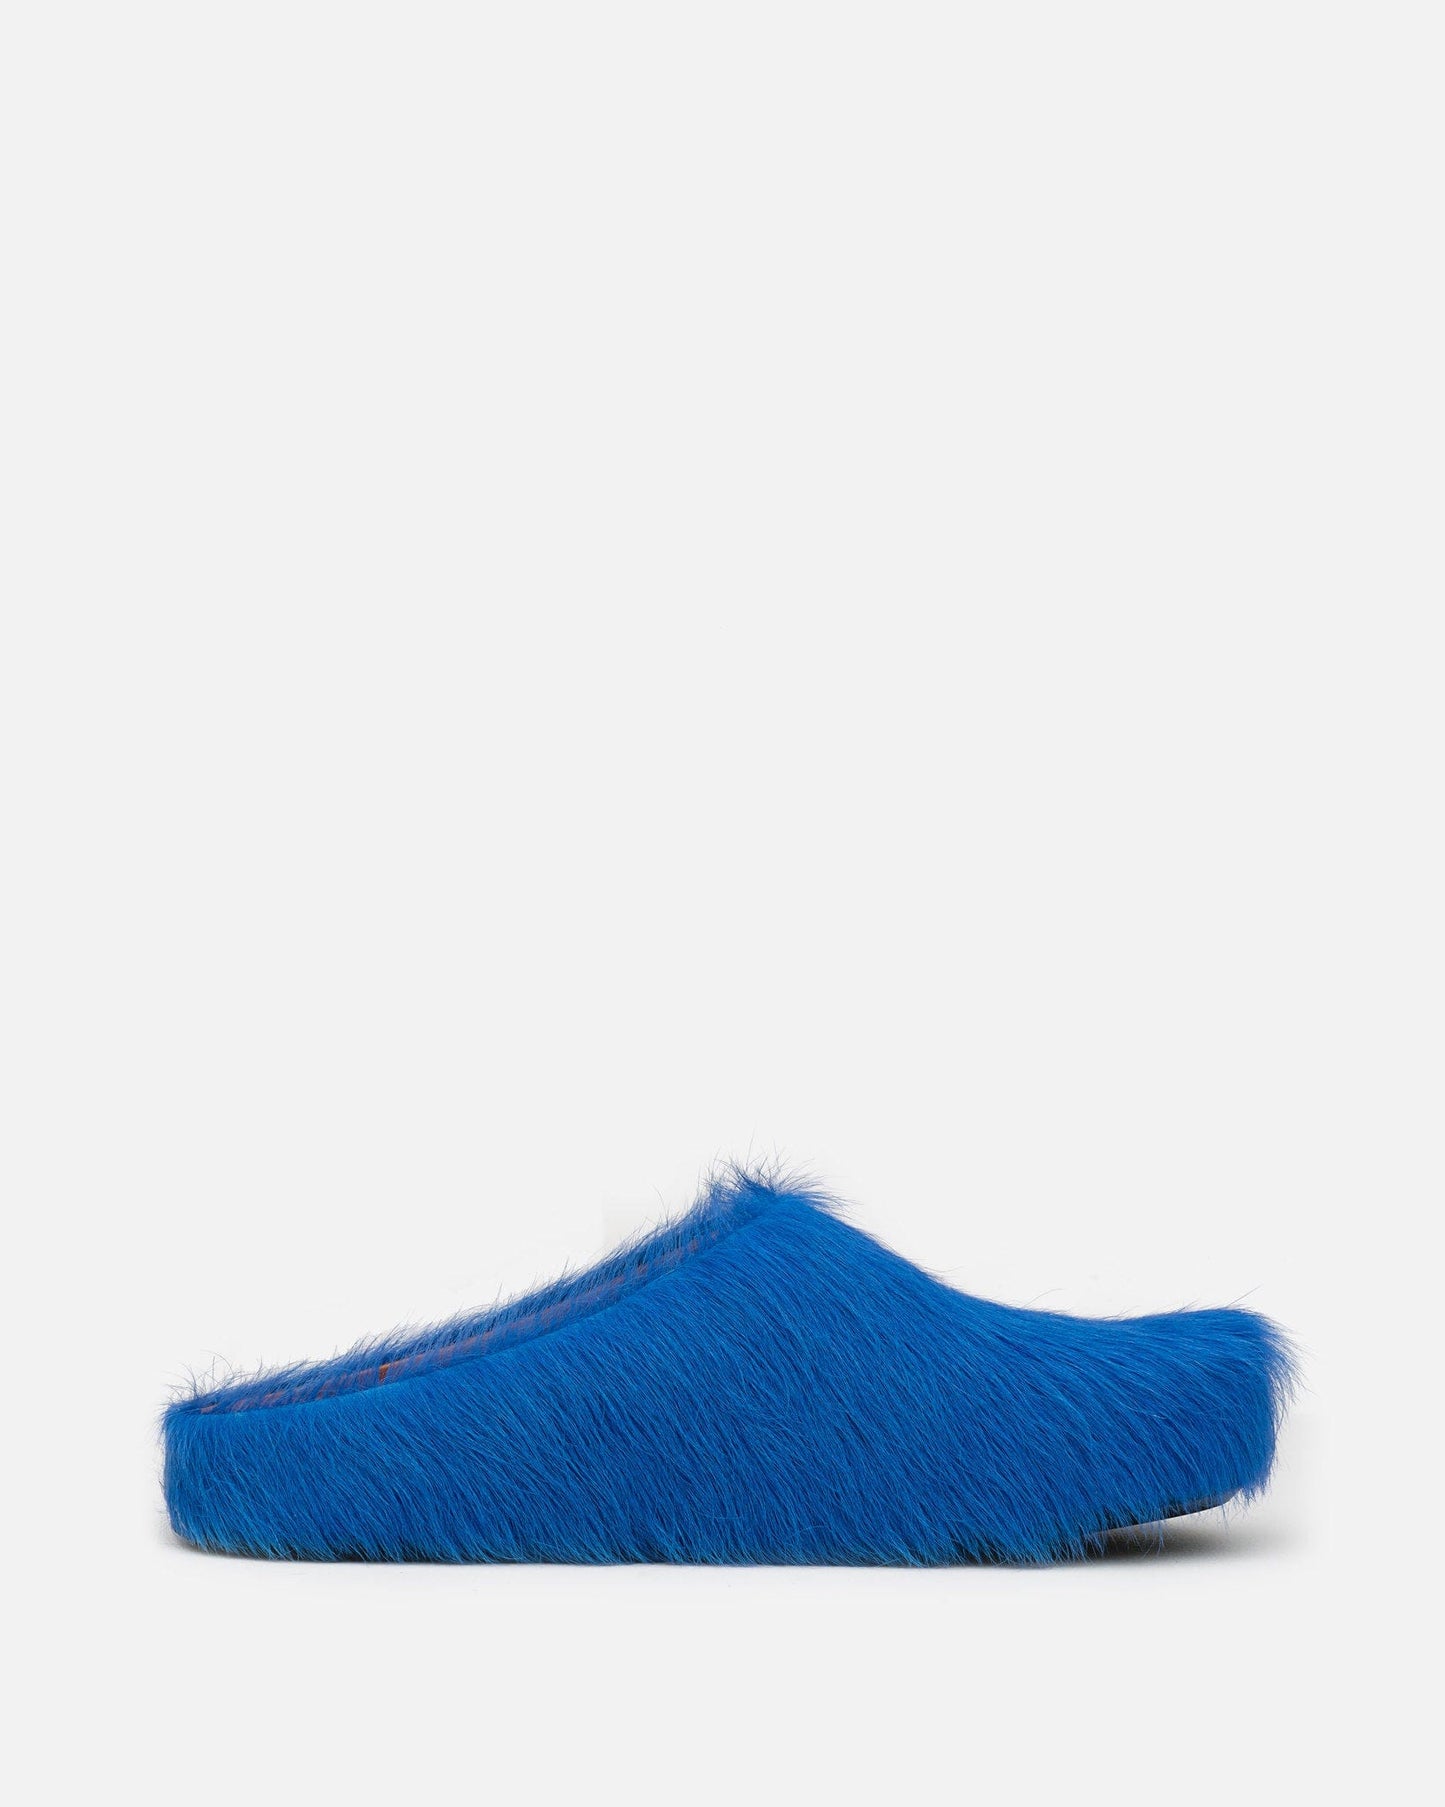 Marni Men's Shoes Long Calf-Hair Sabot in Iris Blue